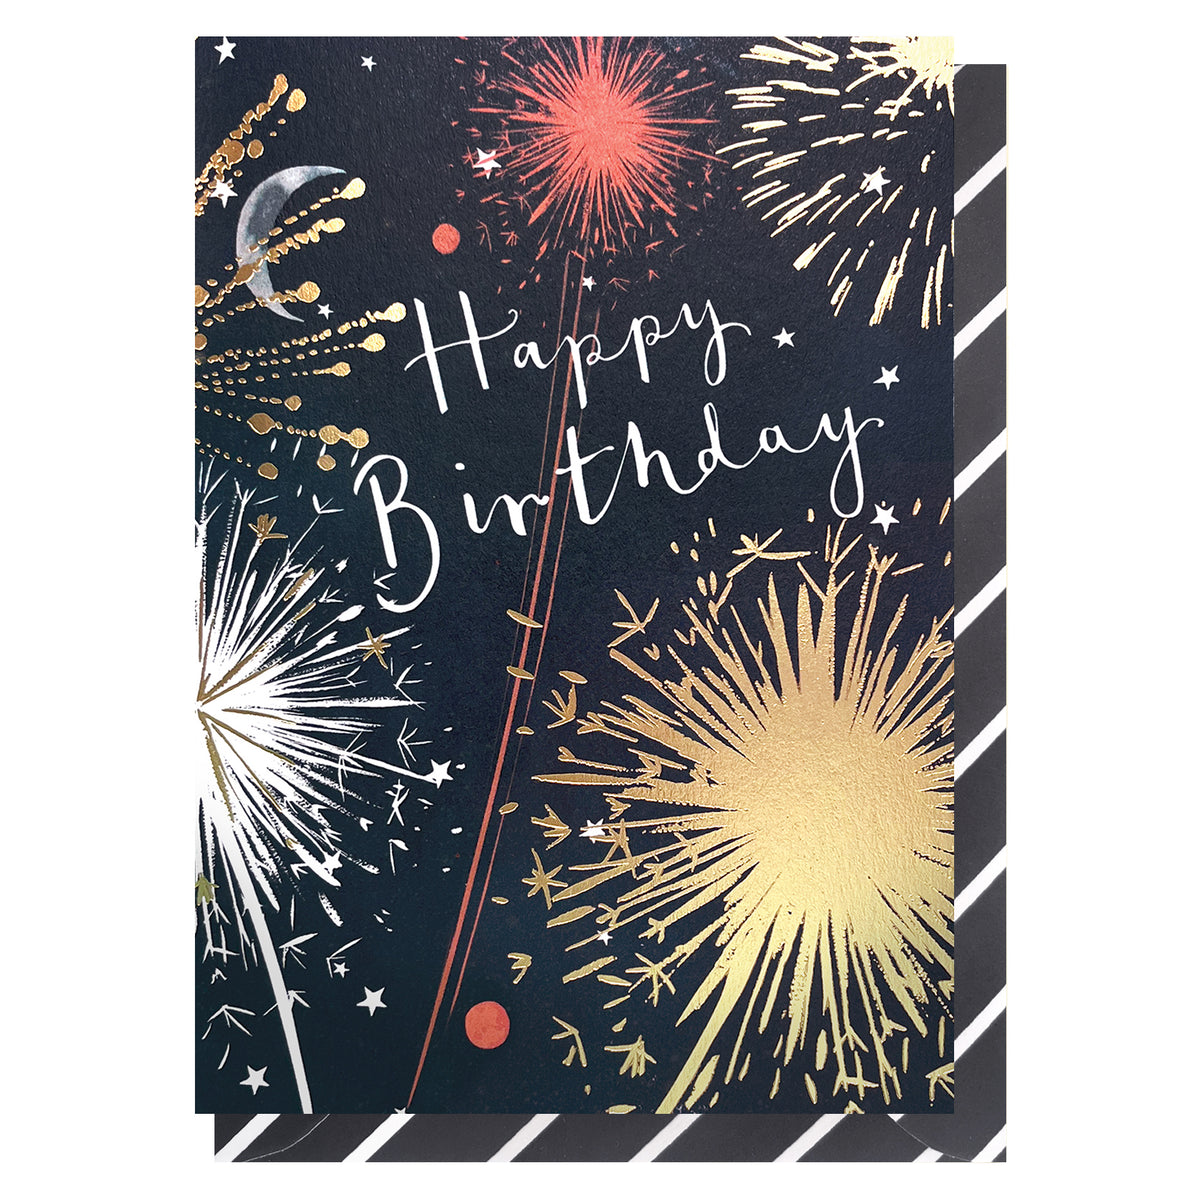 Firework Frenzy Birthday Card from Penny Black